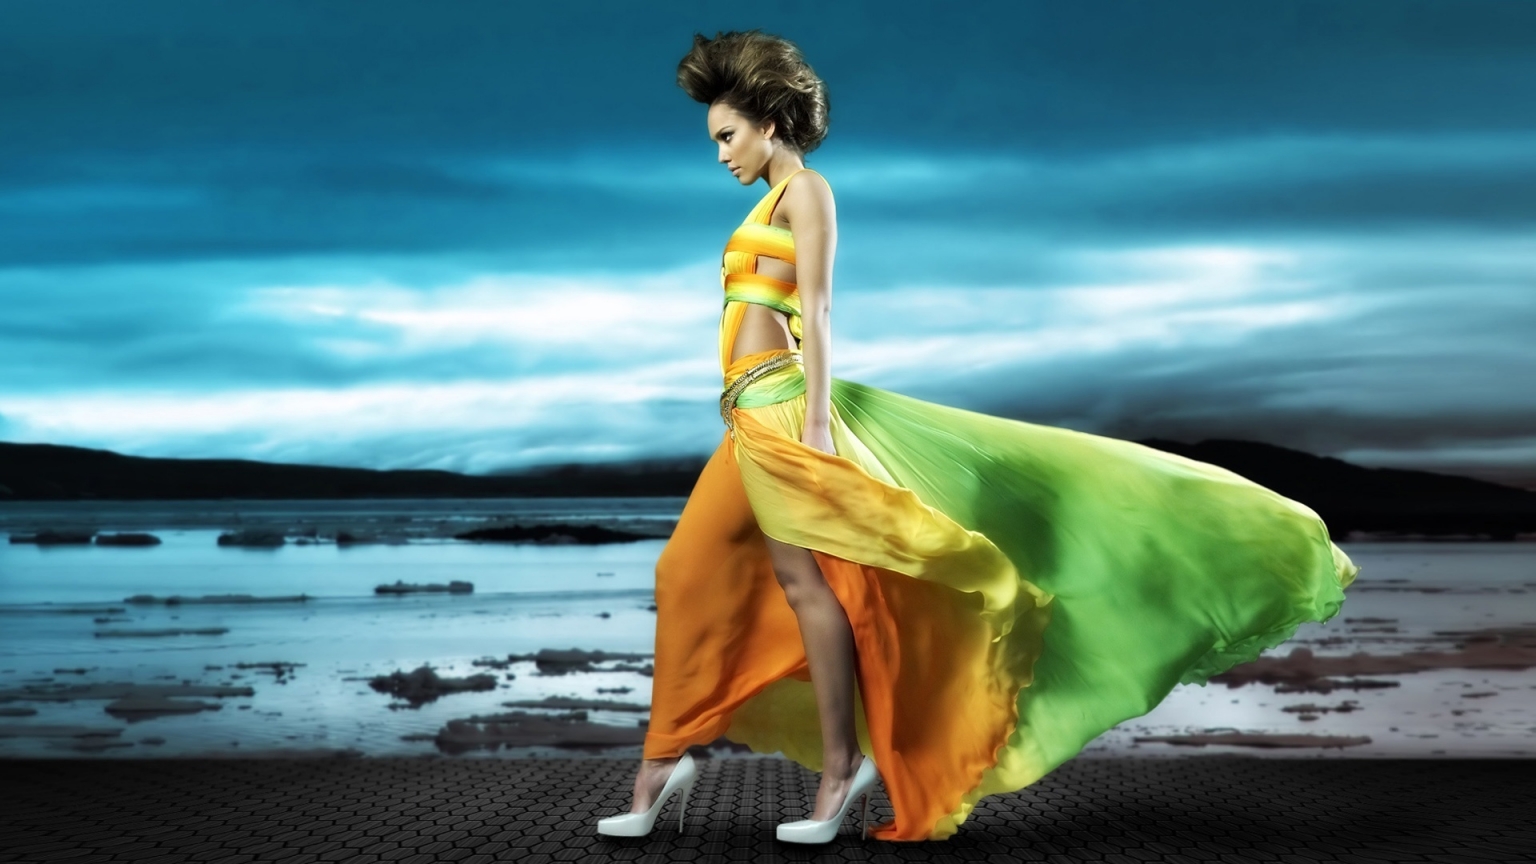 Jessica Alba Raibow Dress for 1536 x 864 HDTV resolution